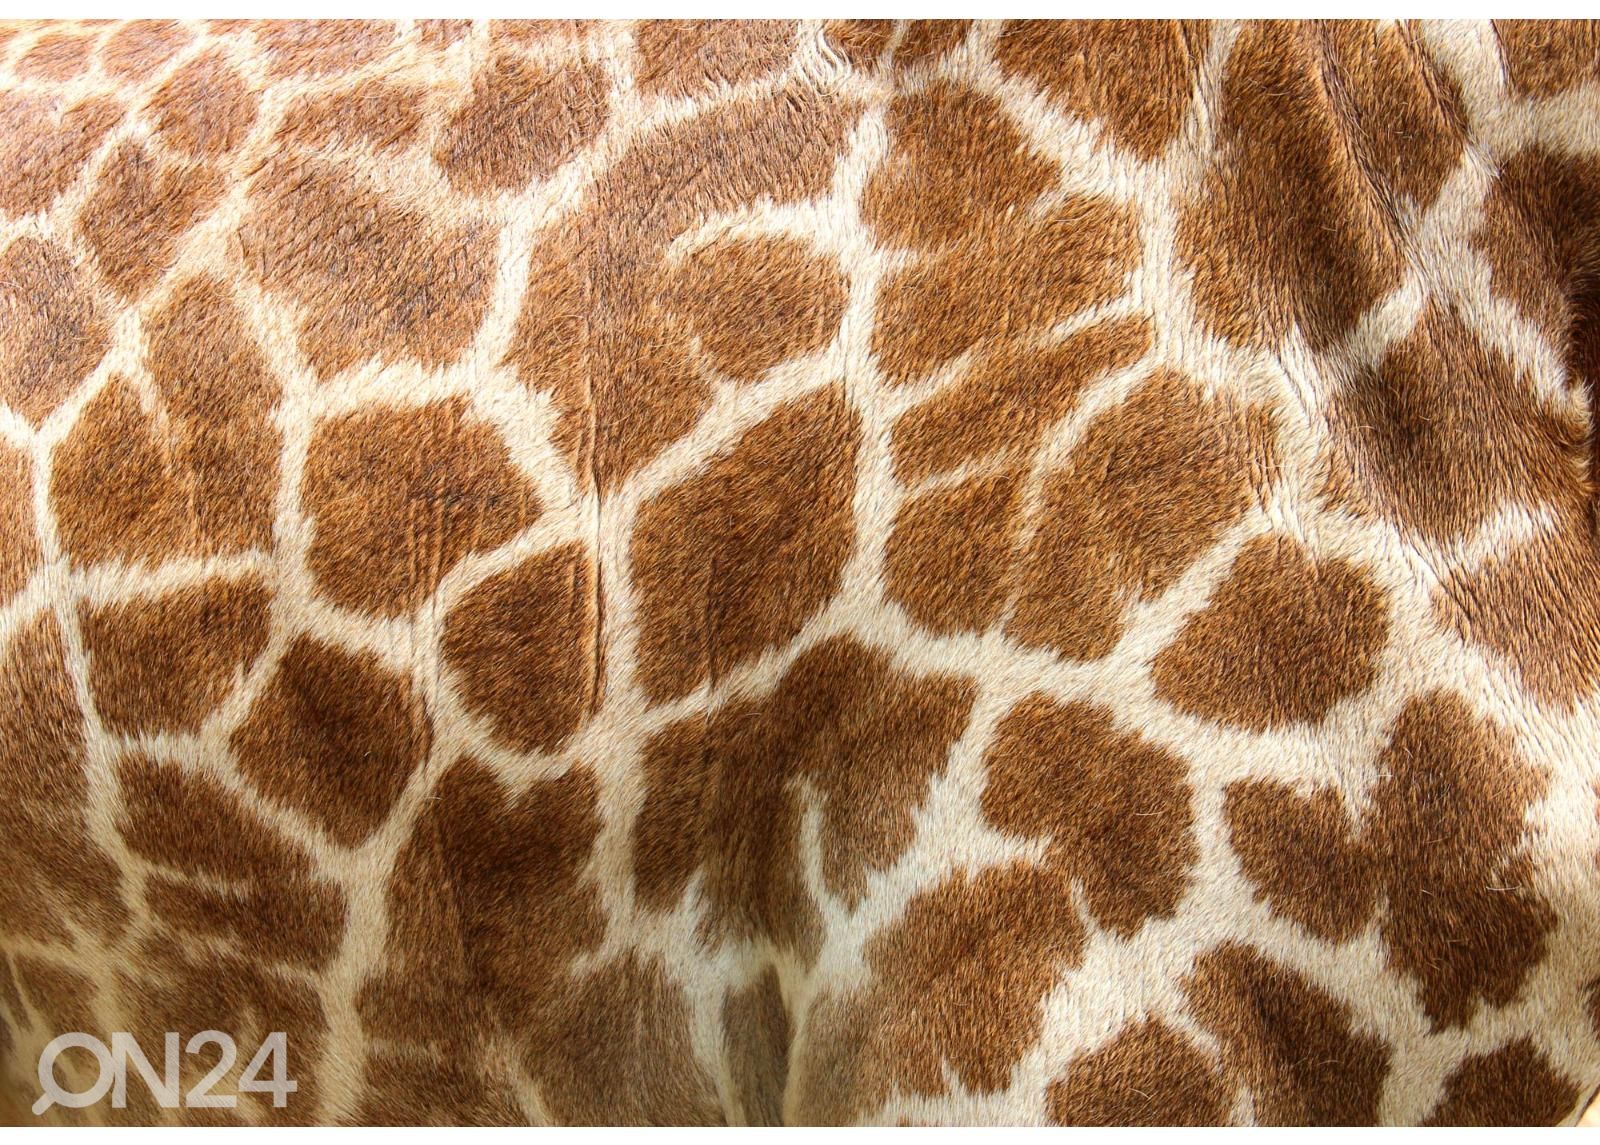 Itseliimautuva kuvatapetti Genuine Leather Of Giraffe kuvasuurennos